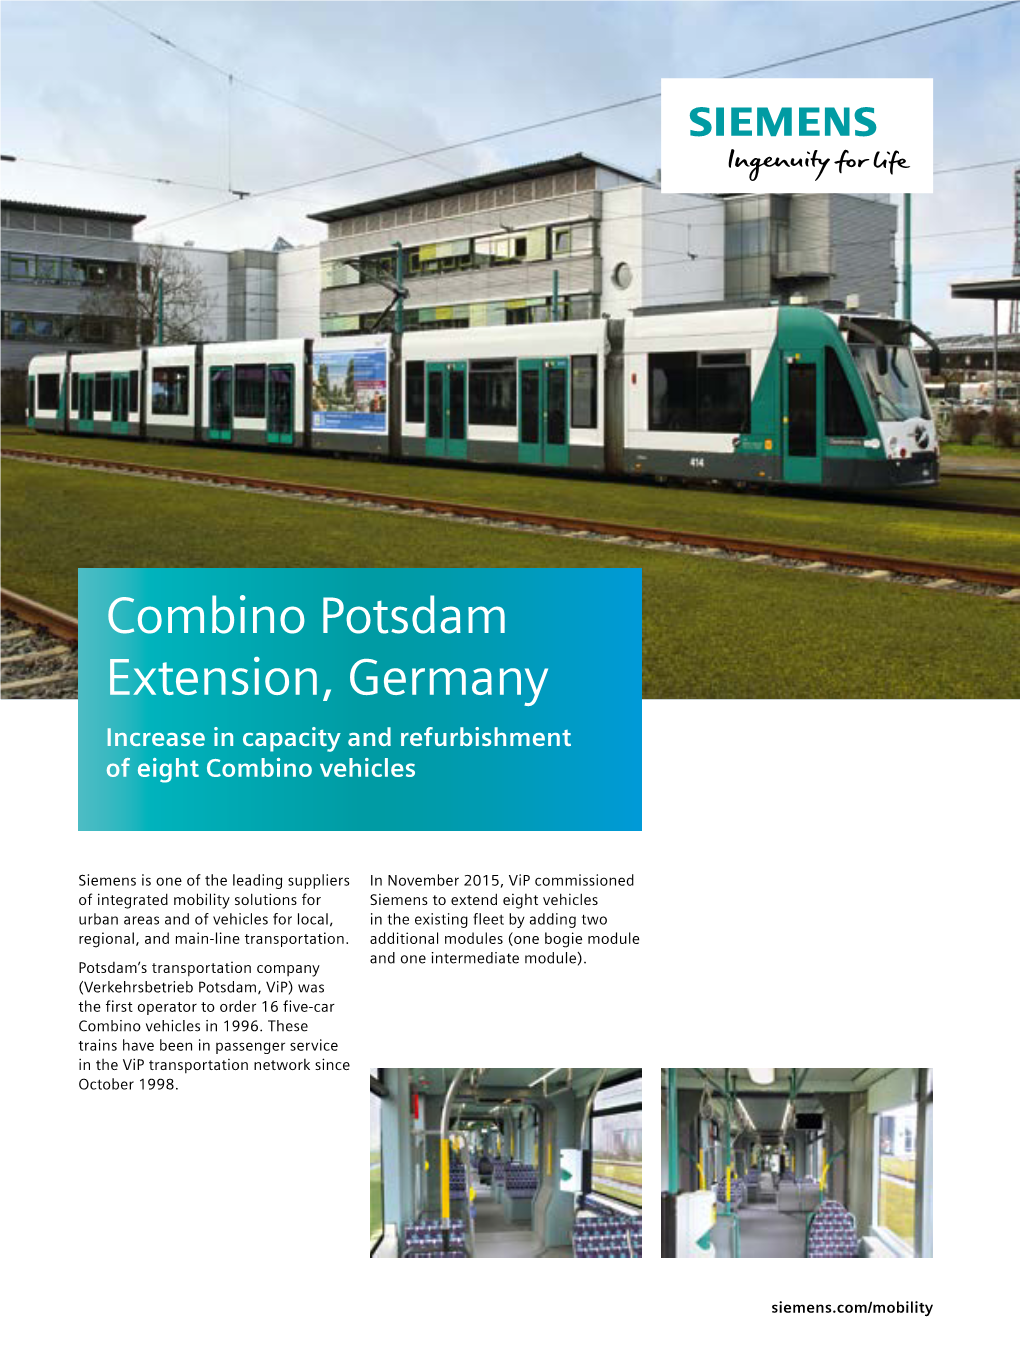 Combino Potsdam Extension, Germany Increase in Capacity and Refurbishment of Eight Combino Vehicles